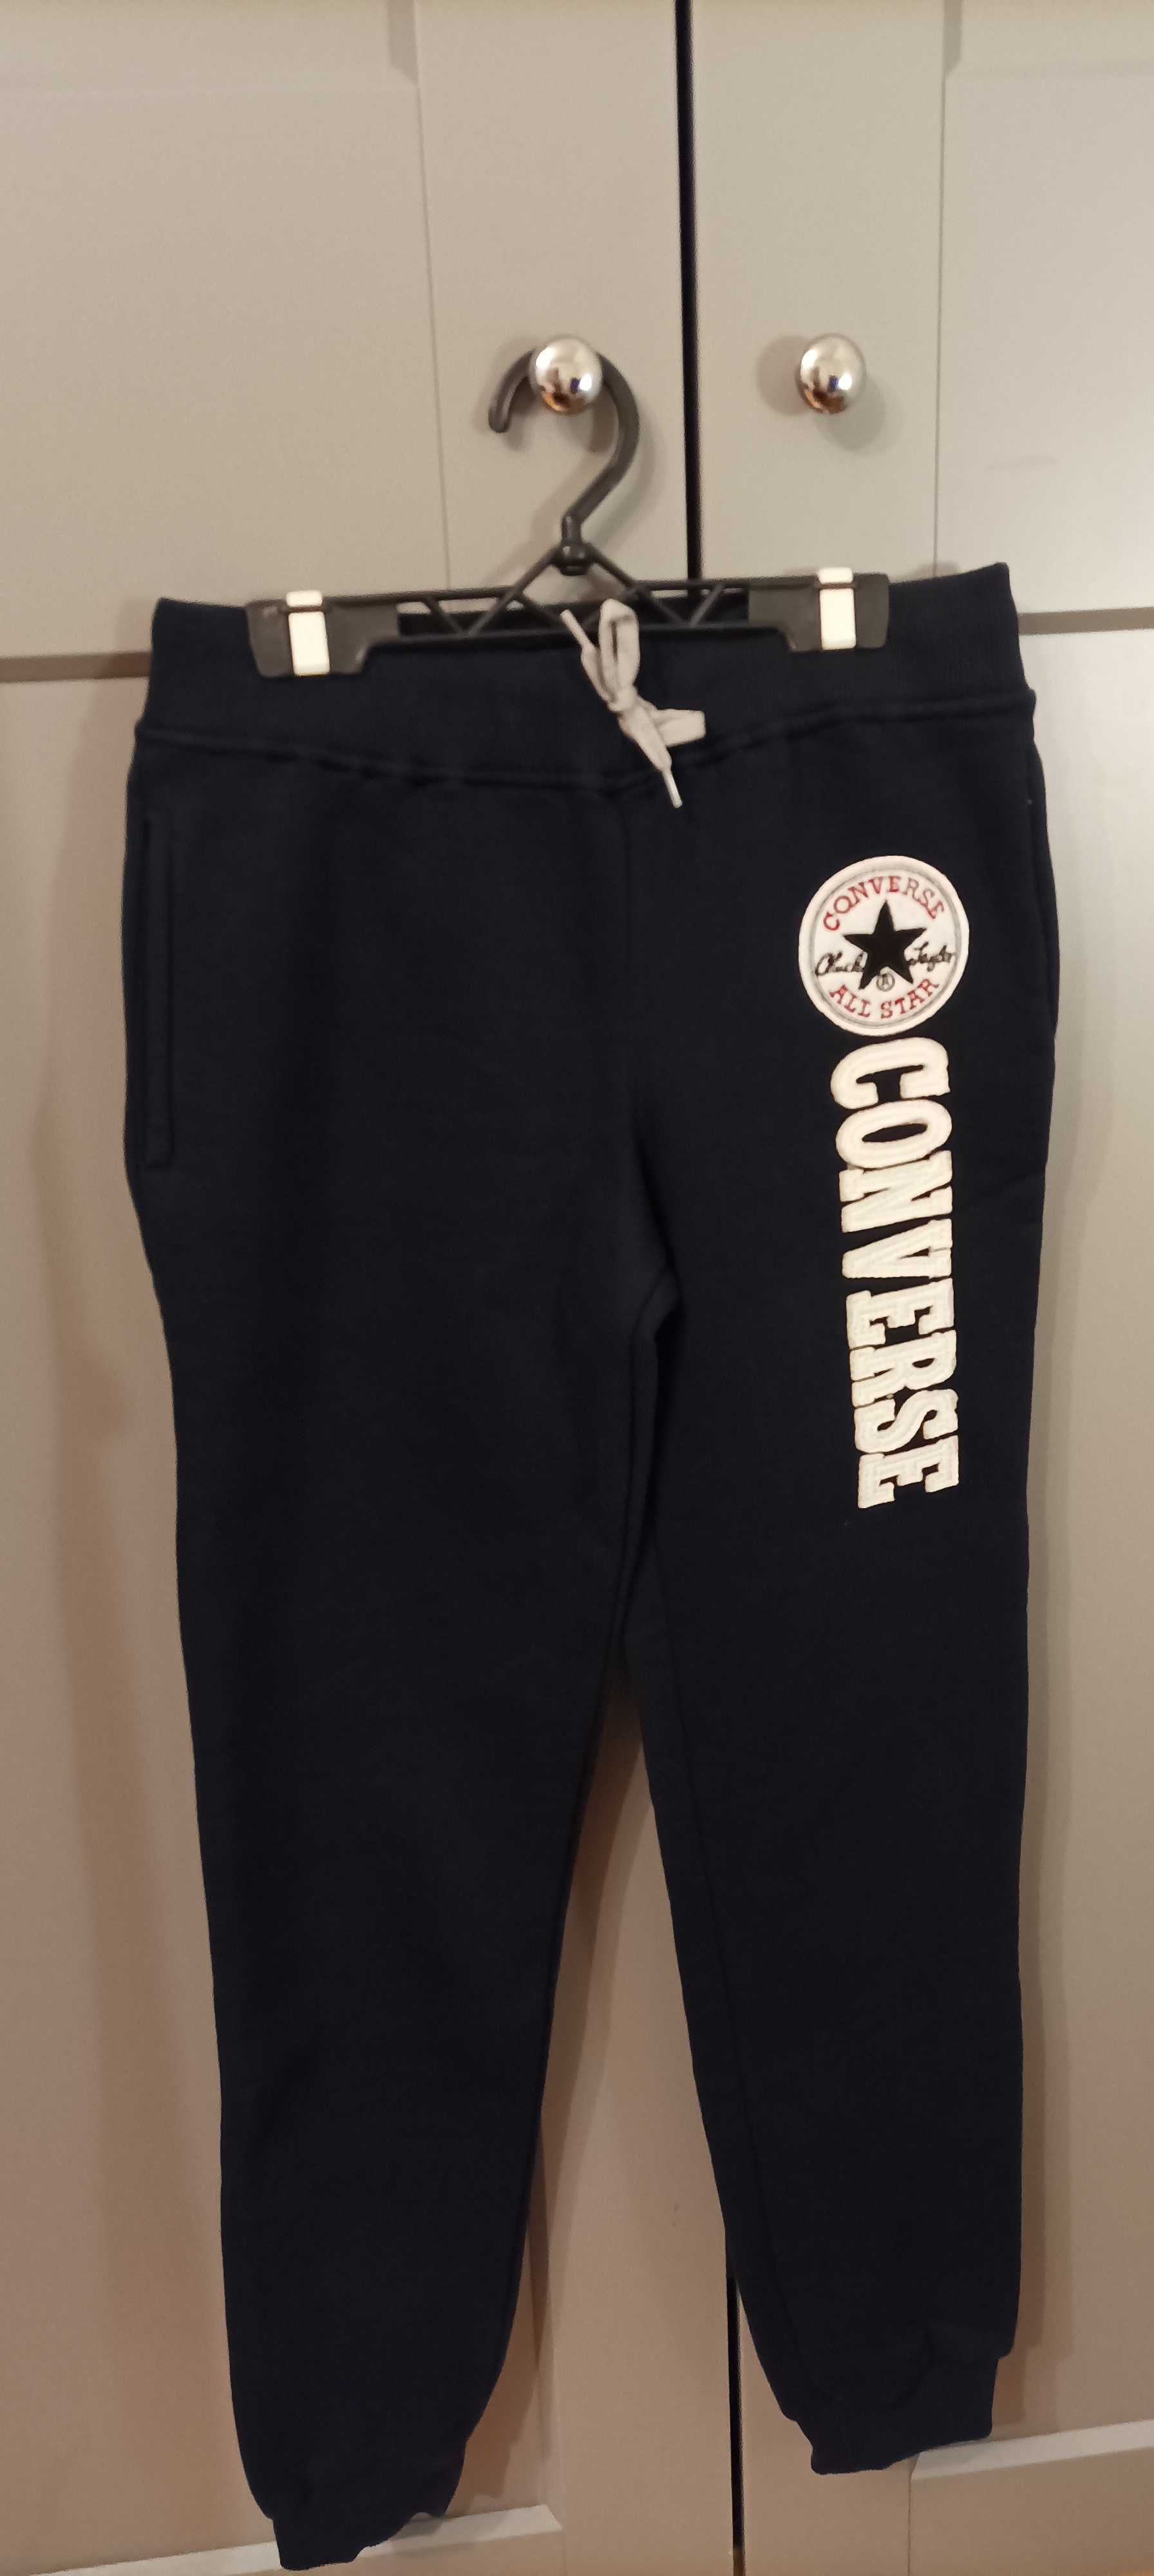 Nowe spodnie dresowe Converse